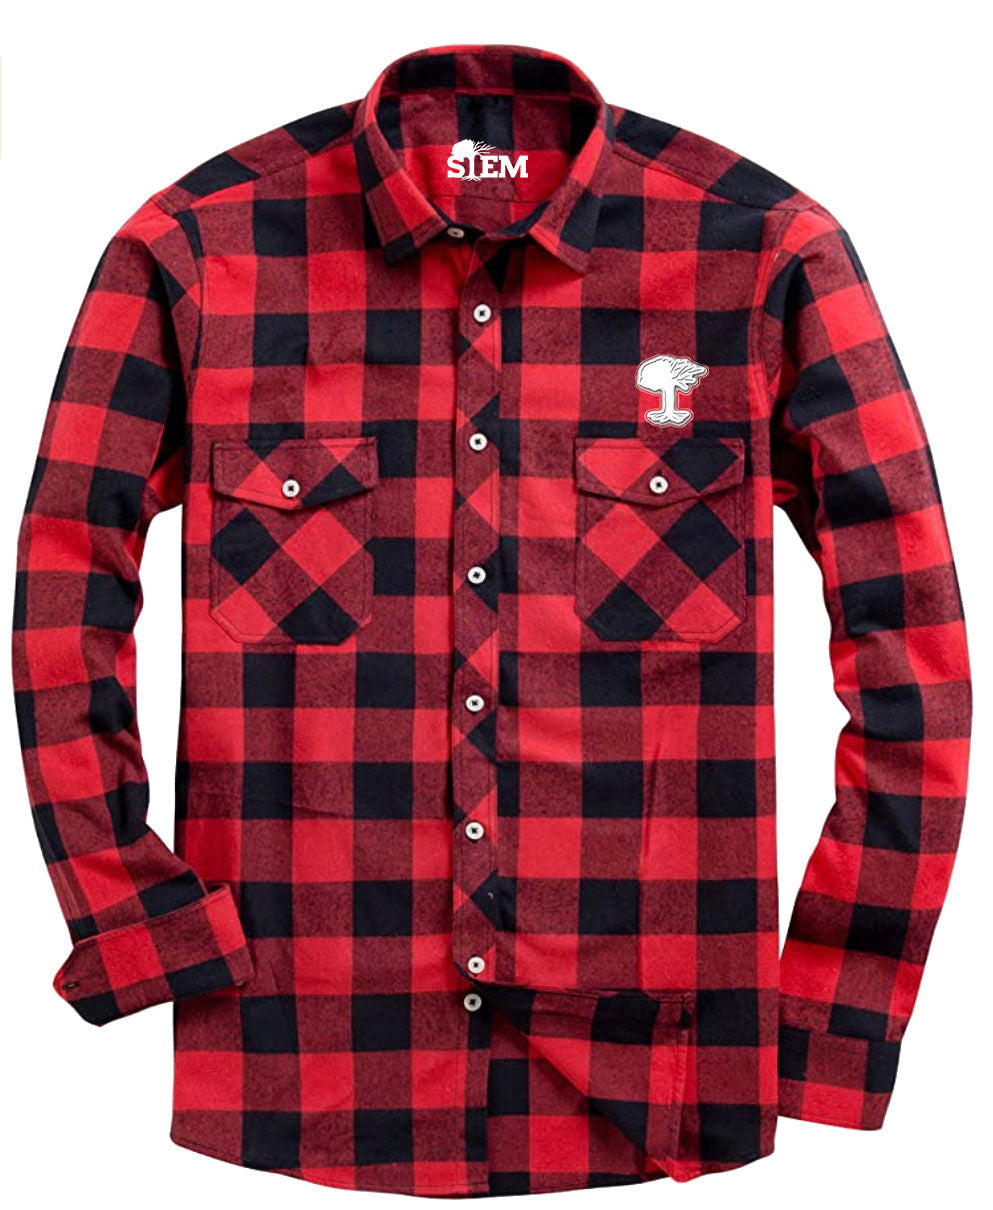 STEM "Lumberjack" Plaid Flannel Shirt